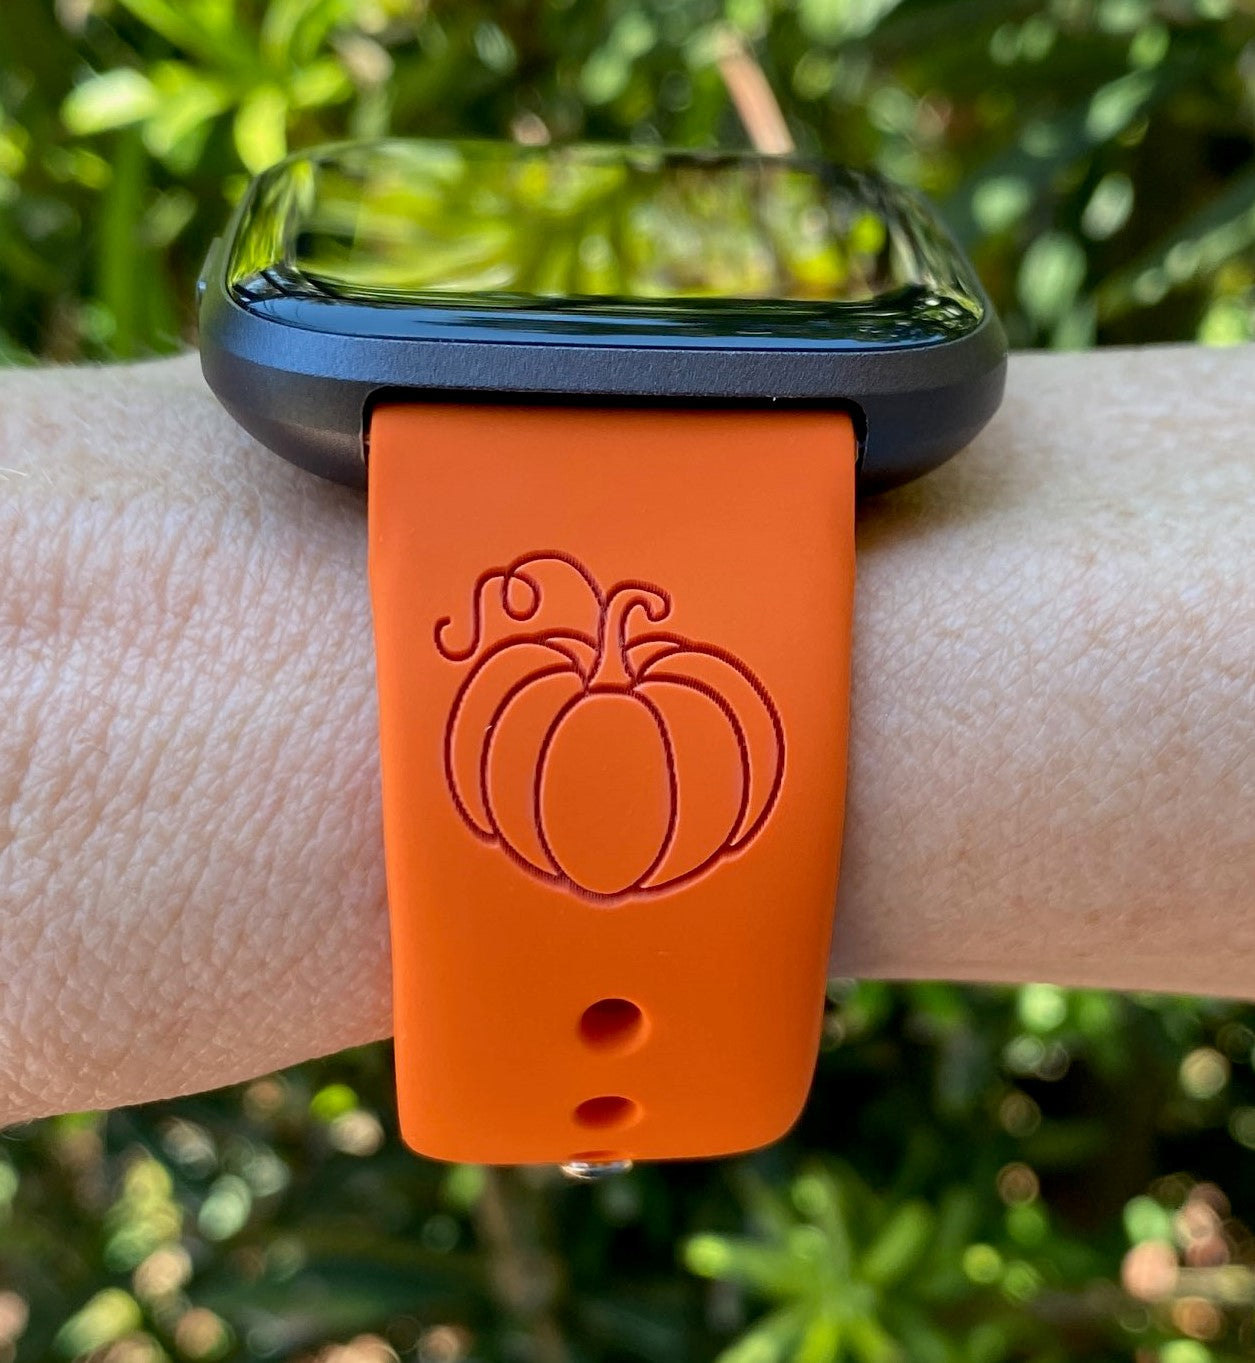 Pumpkin Spice Fitbit Versa 1/2 Watch Band